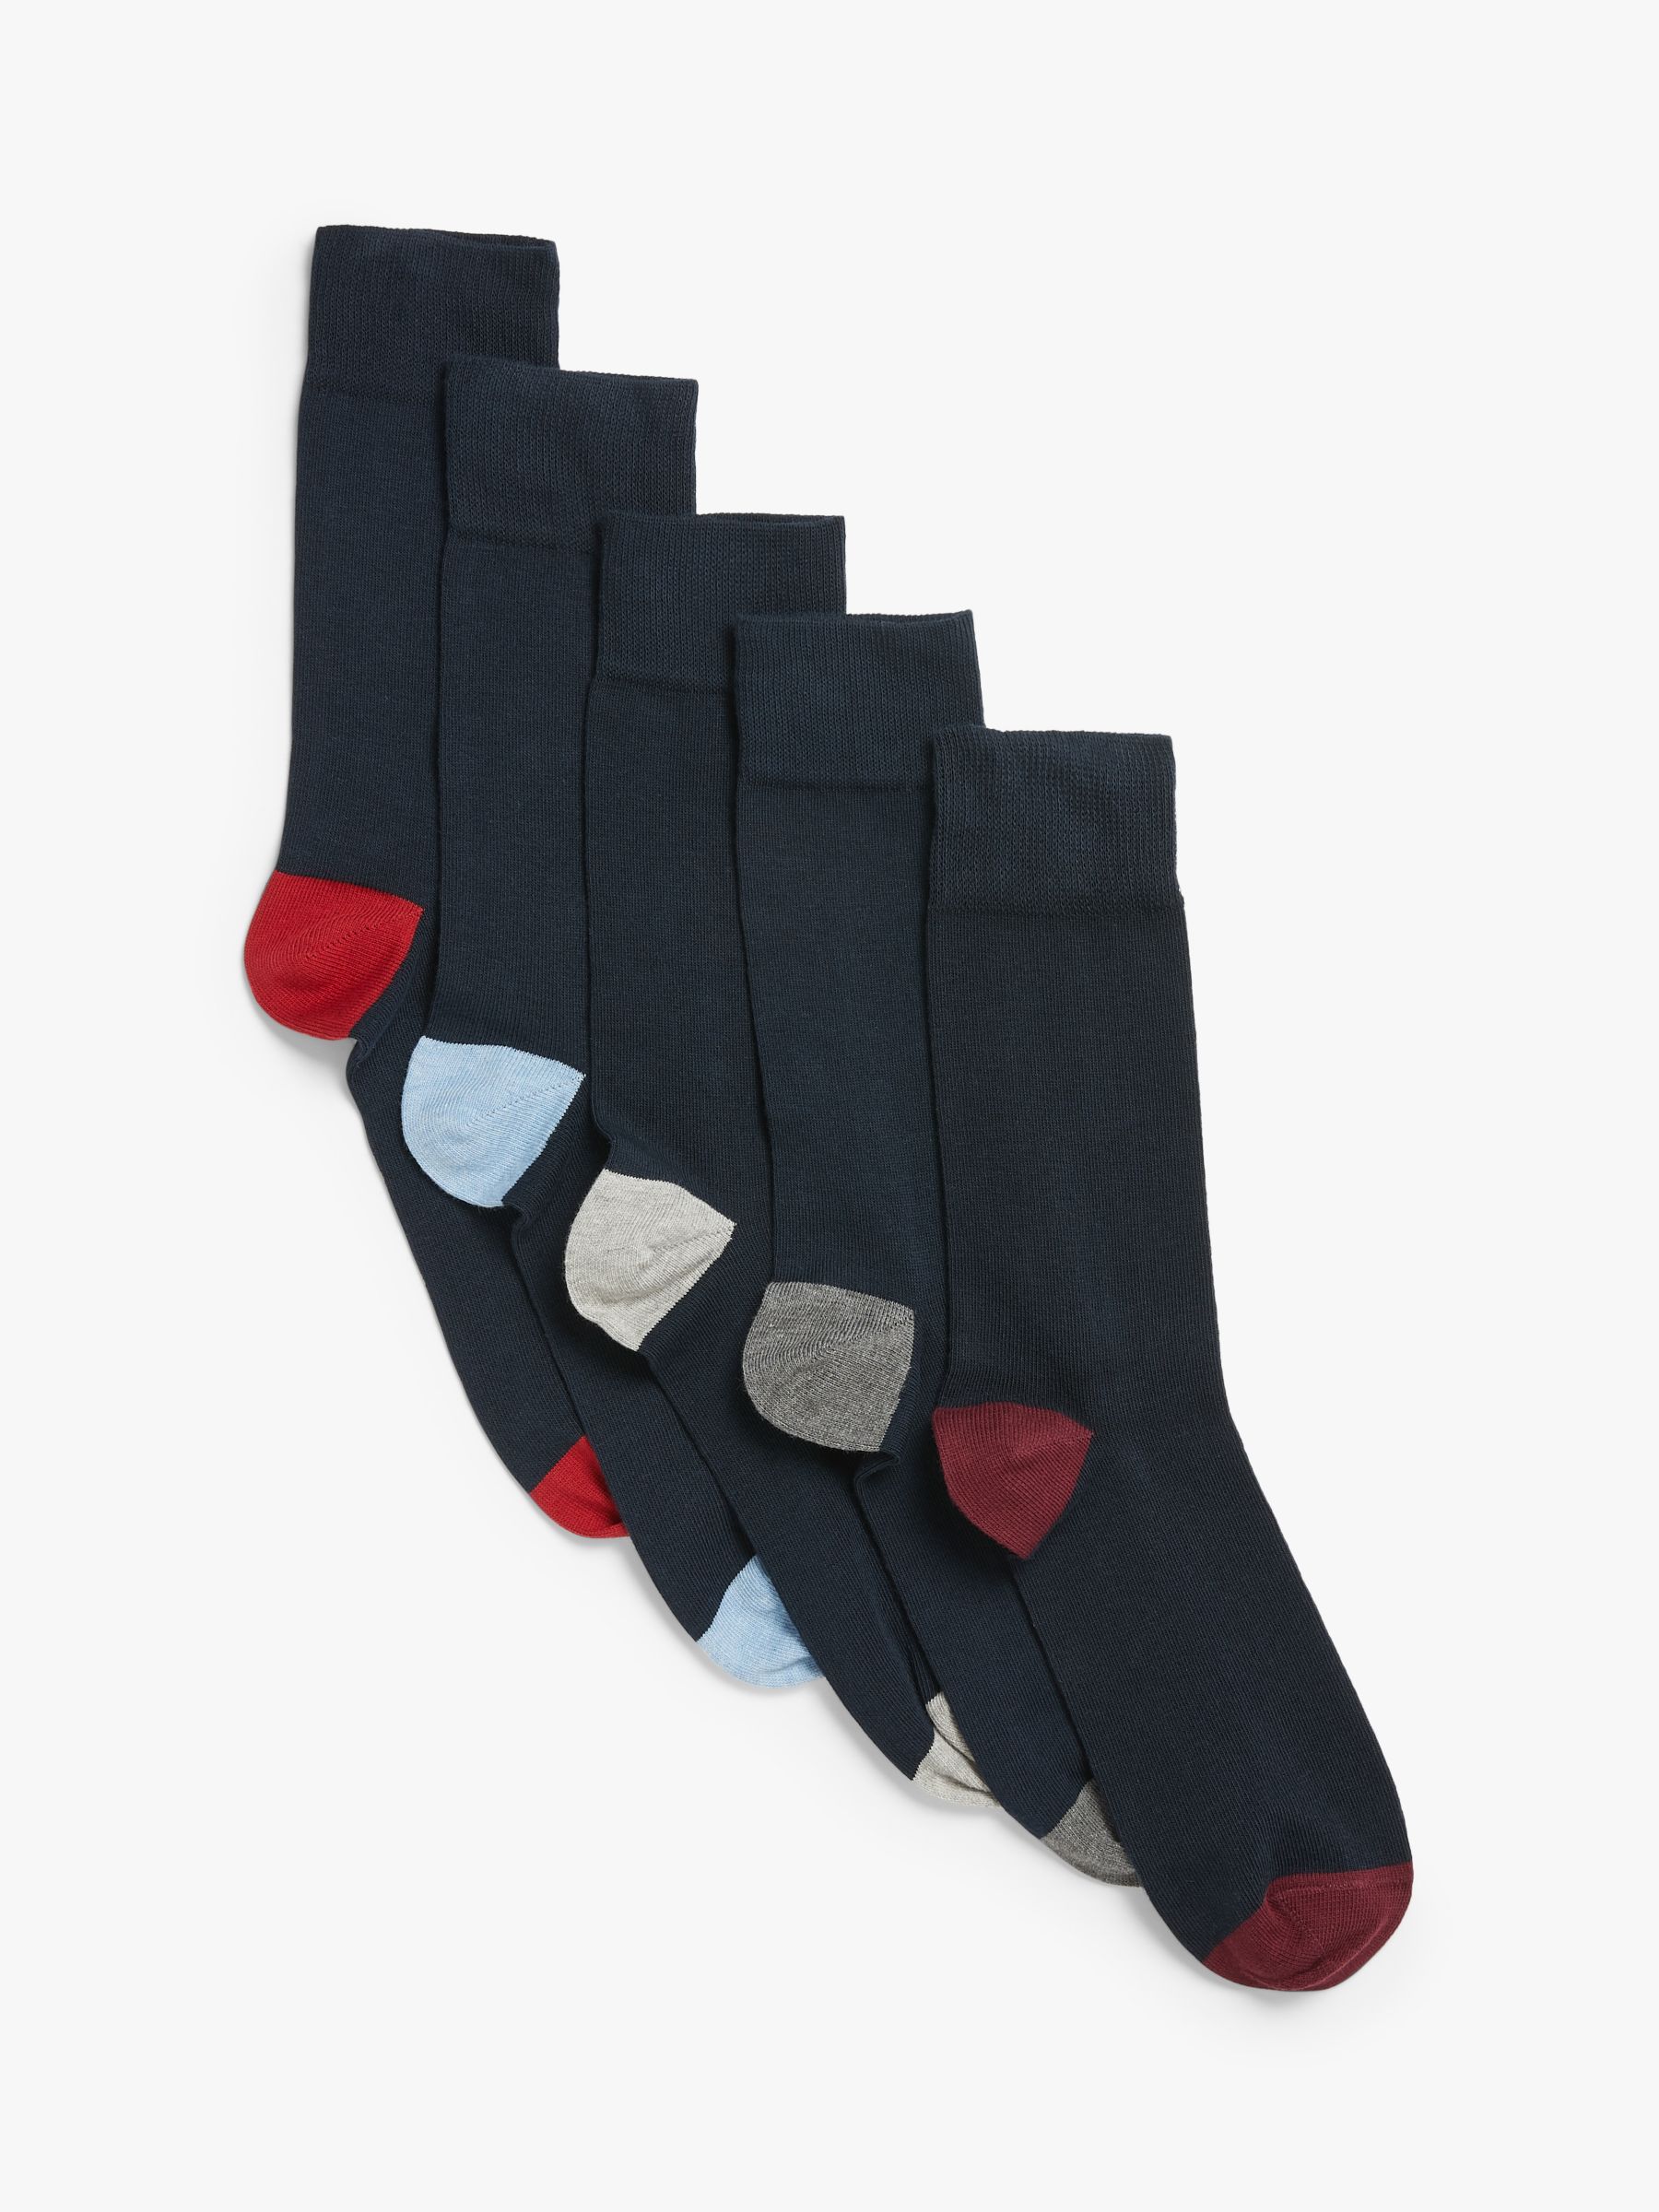 Buy John Lewis Organic Cotton Rich Heel and Toe Men's Socks, Pack of 5 Online at johnlewis.com